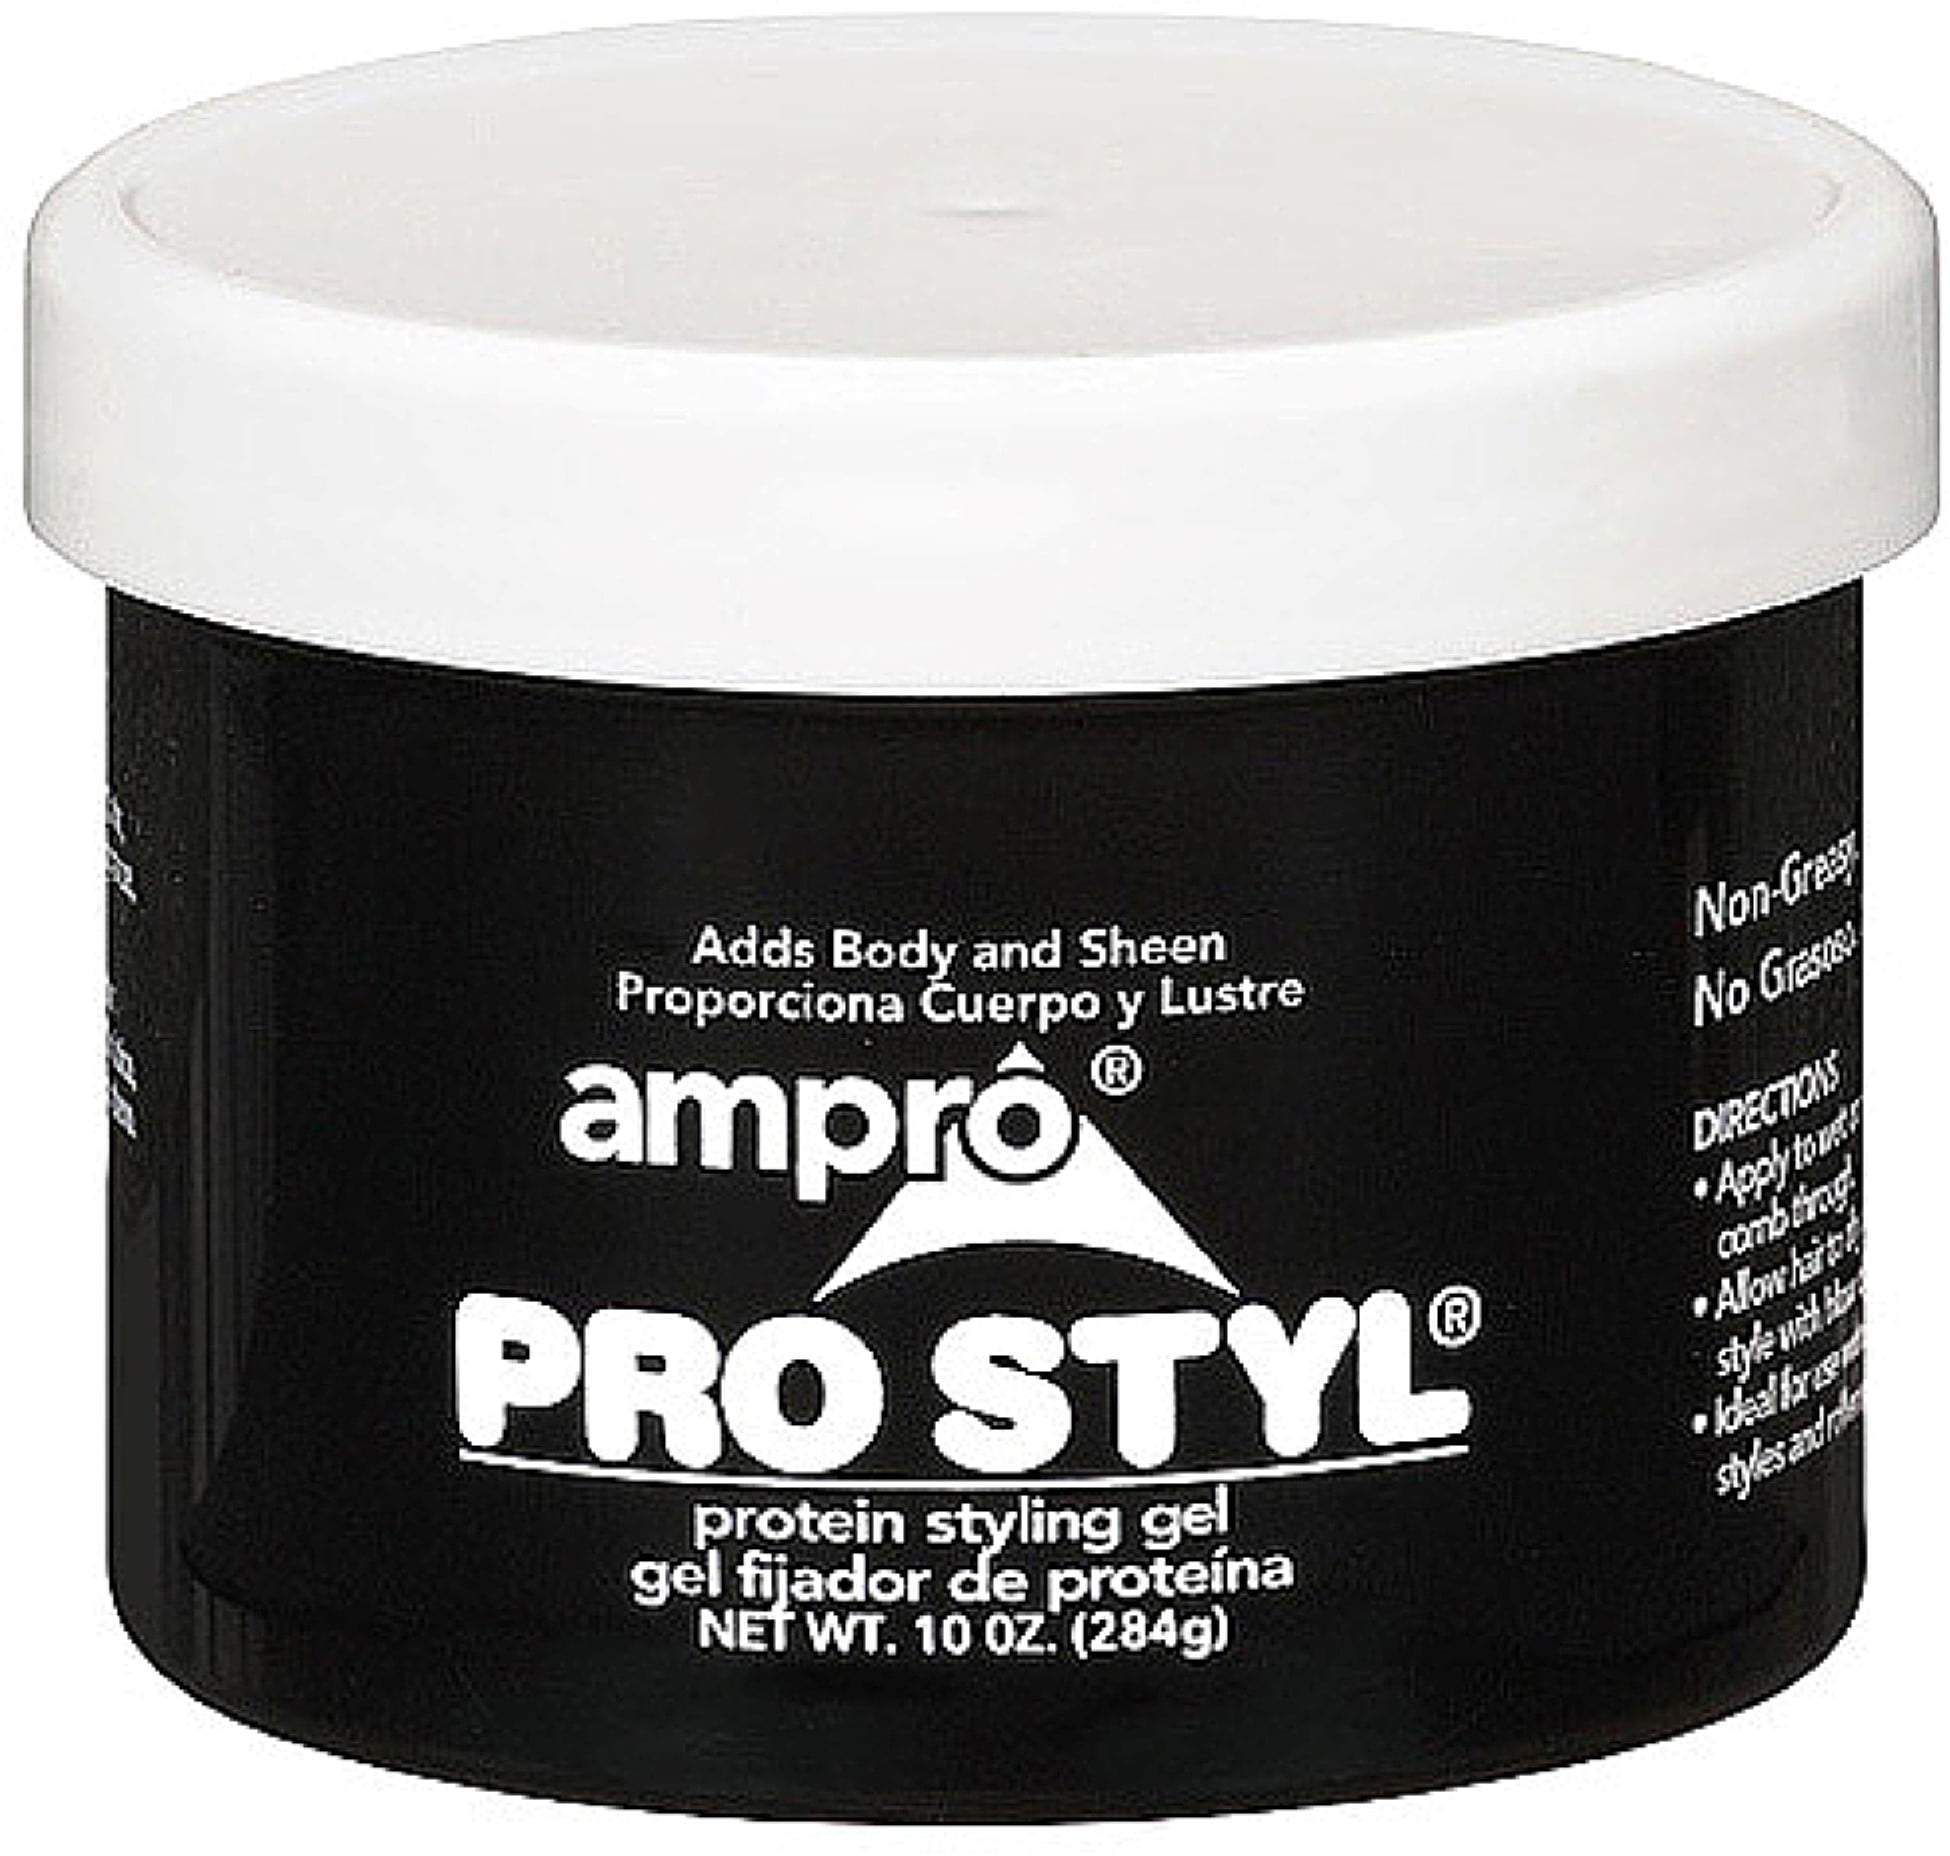 Ampro Pro Styl Regular Hold Protein Styling Gel, 10 oz 